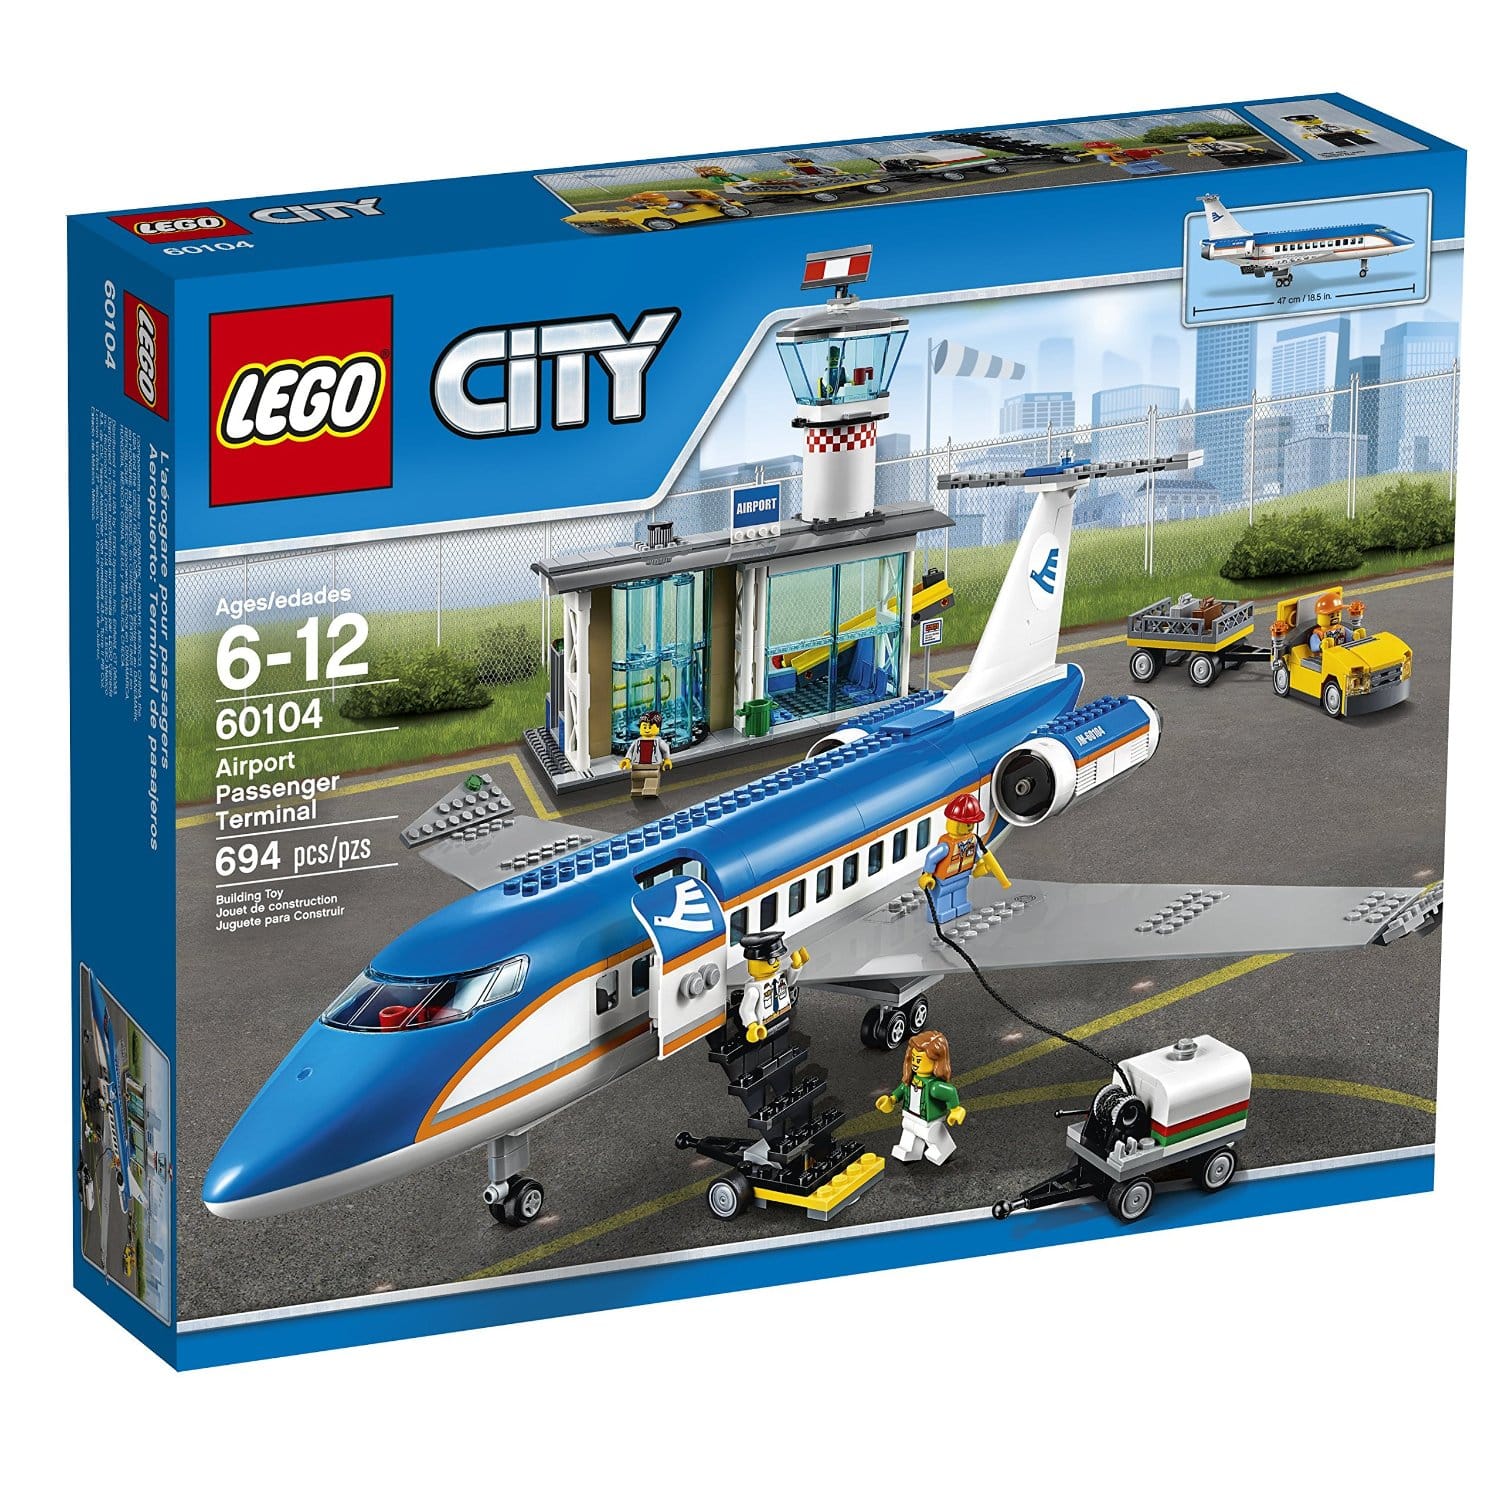 DEAL ALERT: LEGO City Airport 60104 Airport Passenger Terminal Building Kit